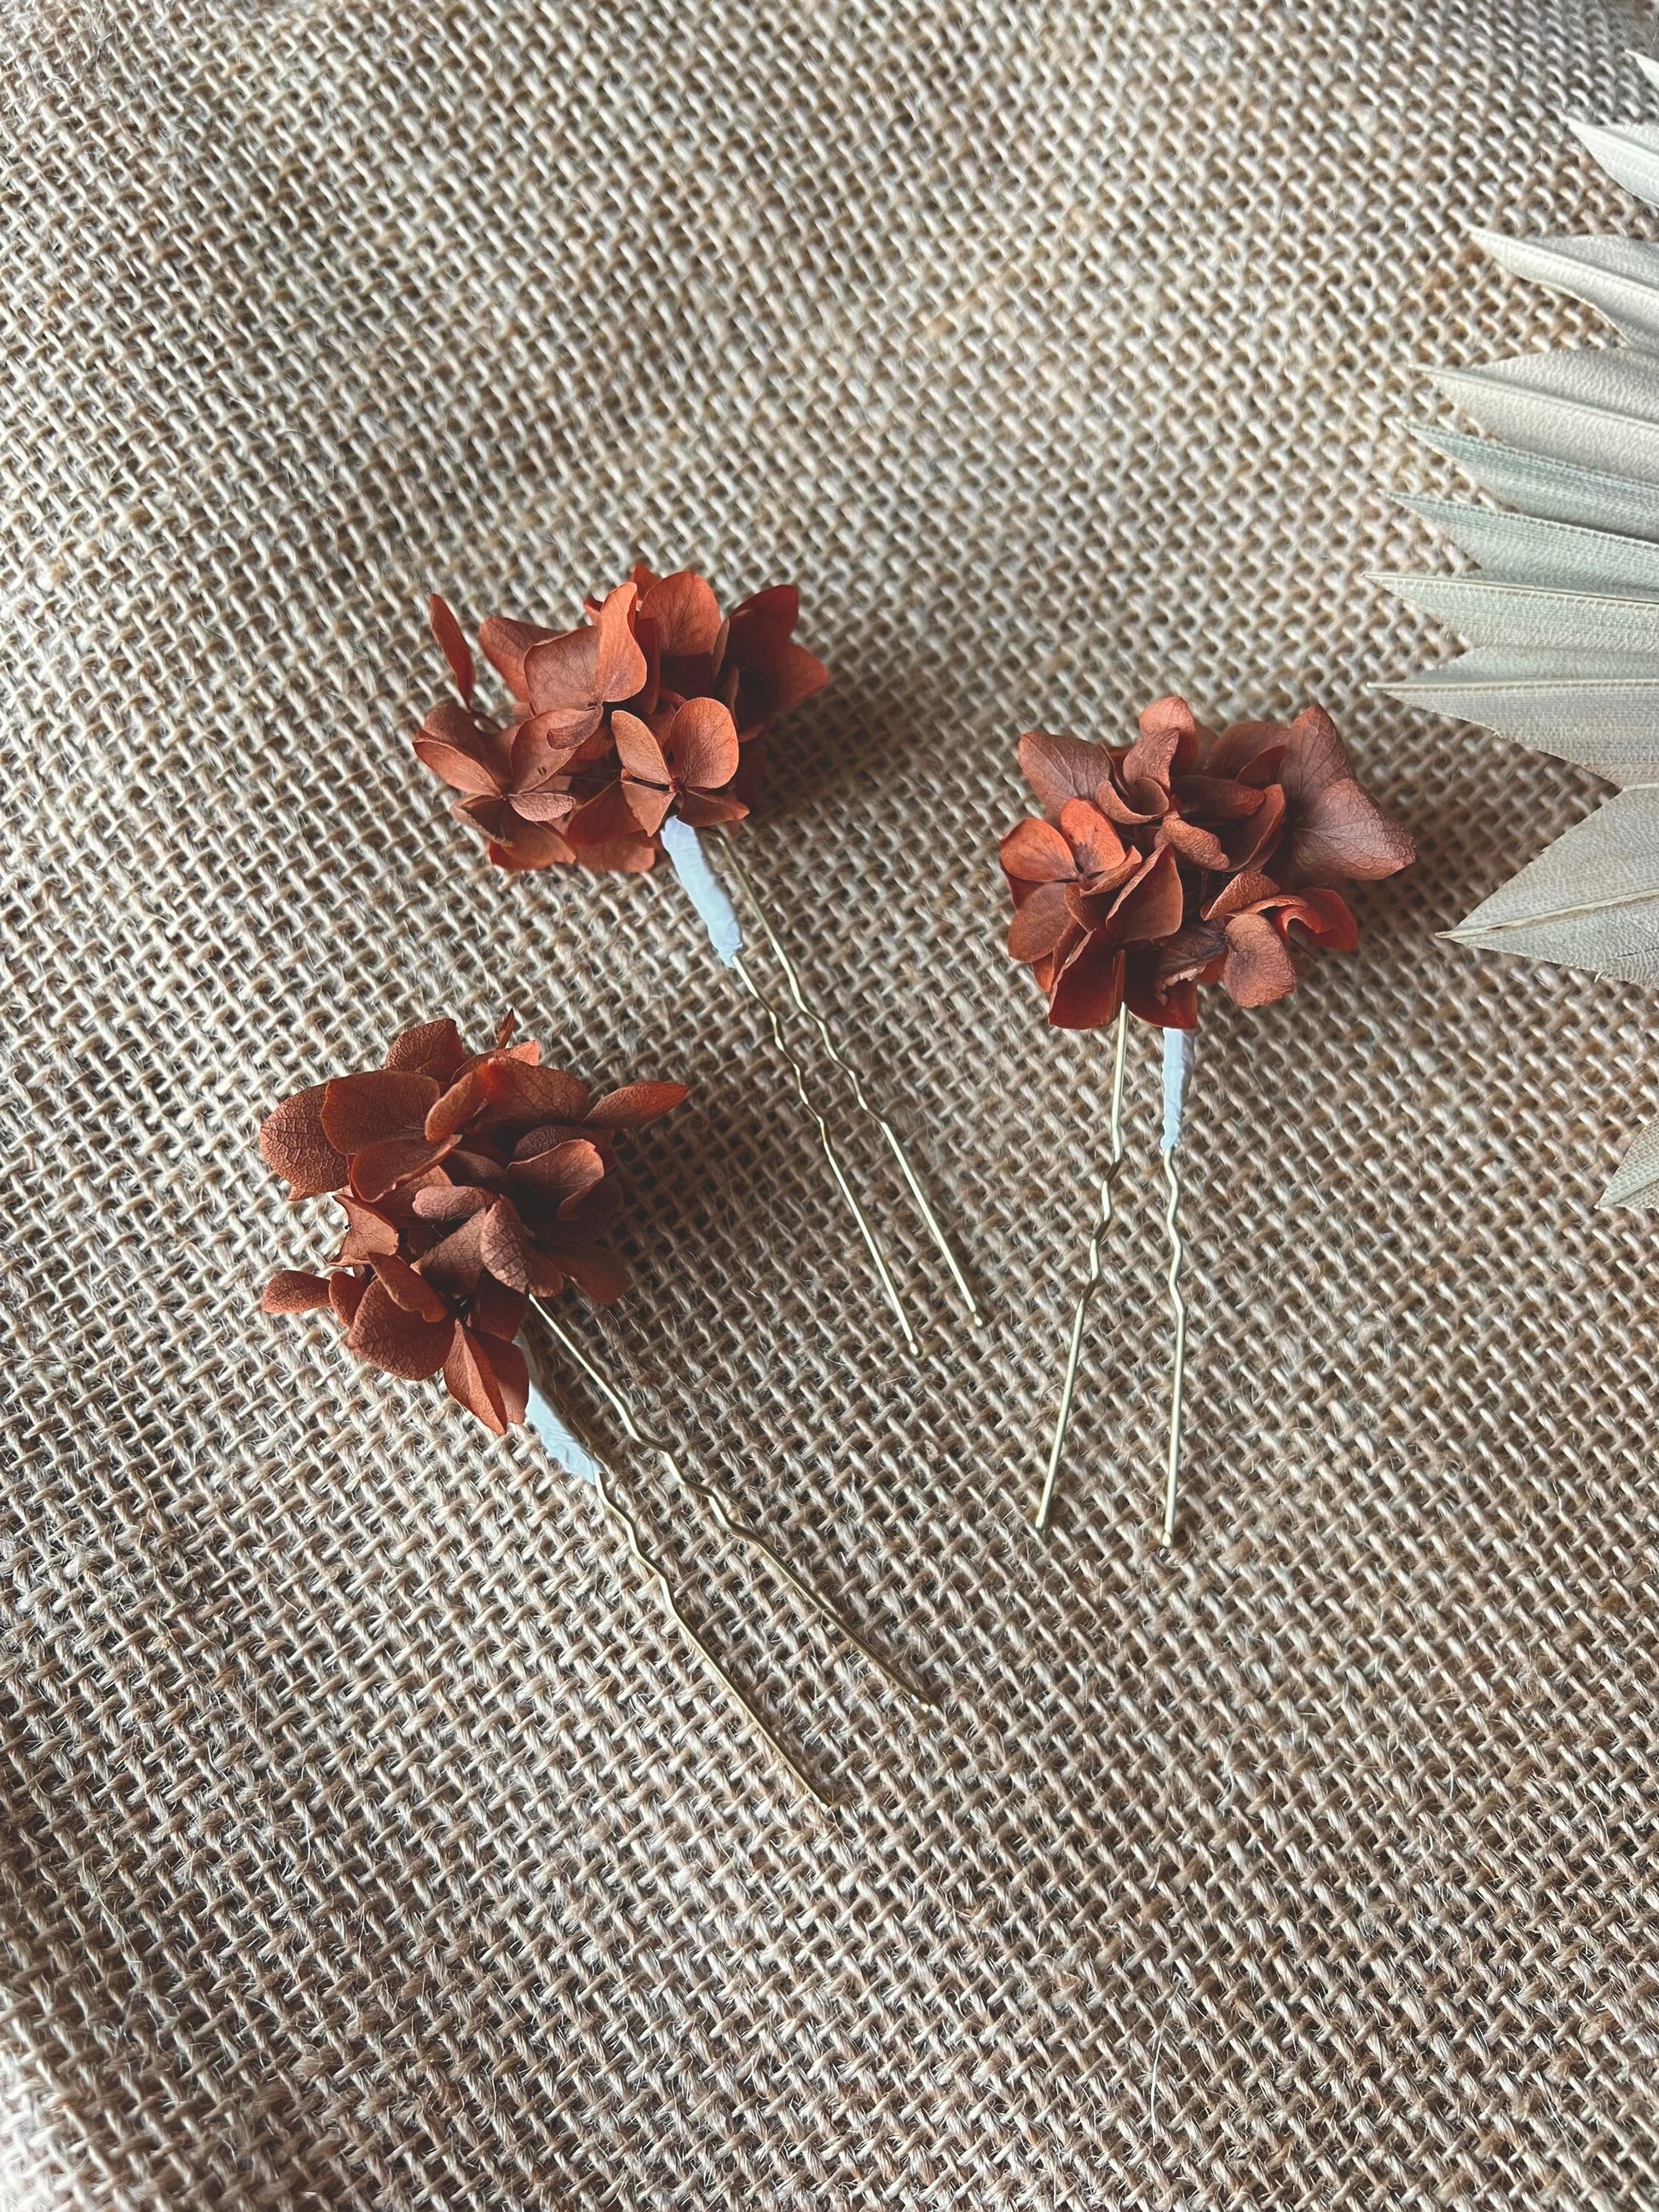 1 Box Natural Dried Hydrangea Flowers Immortal Flowers DIY Craft  Accessories 